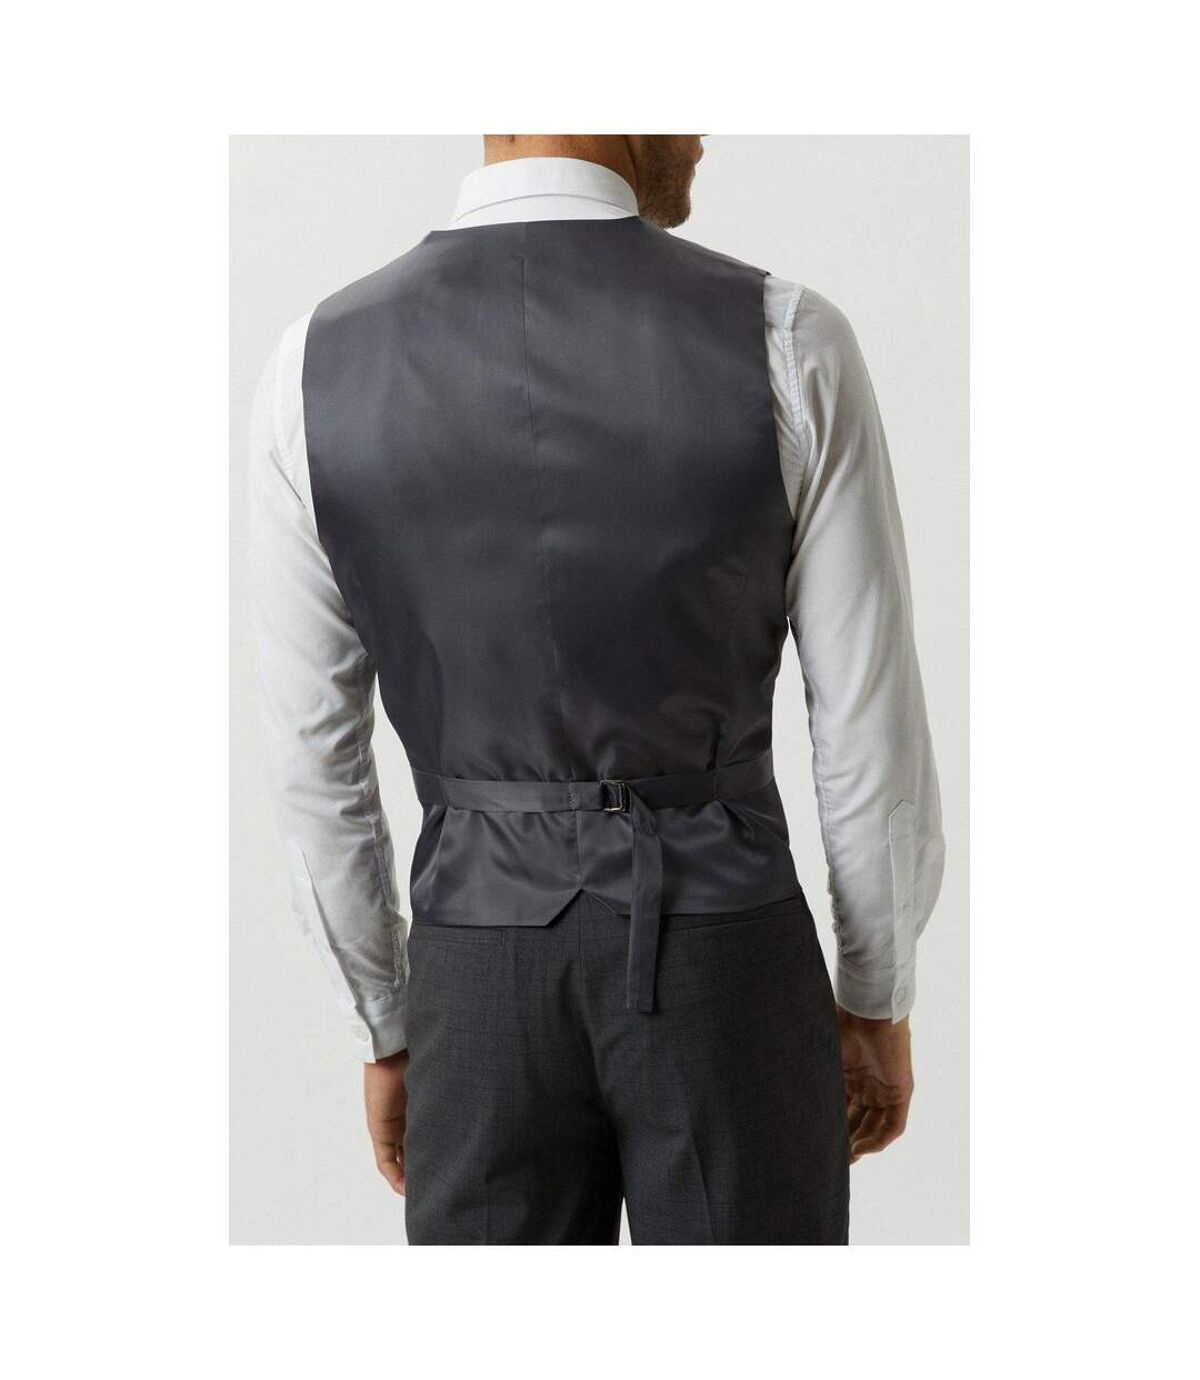 Burton Mens Grid Checked Slim Vest (Gray)